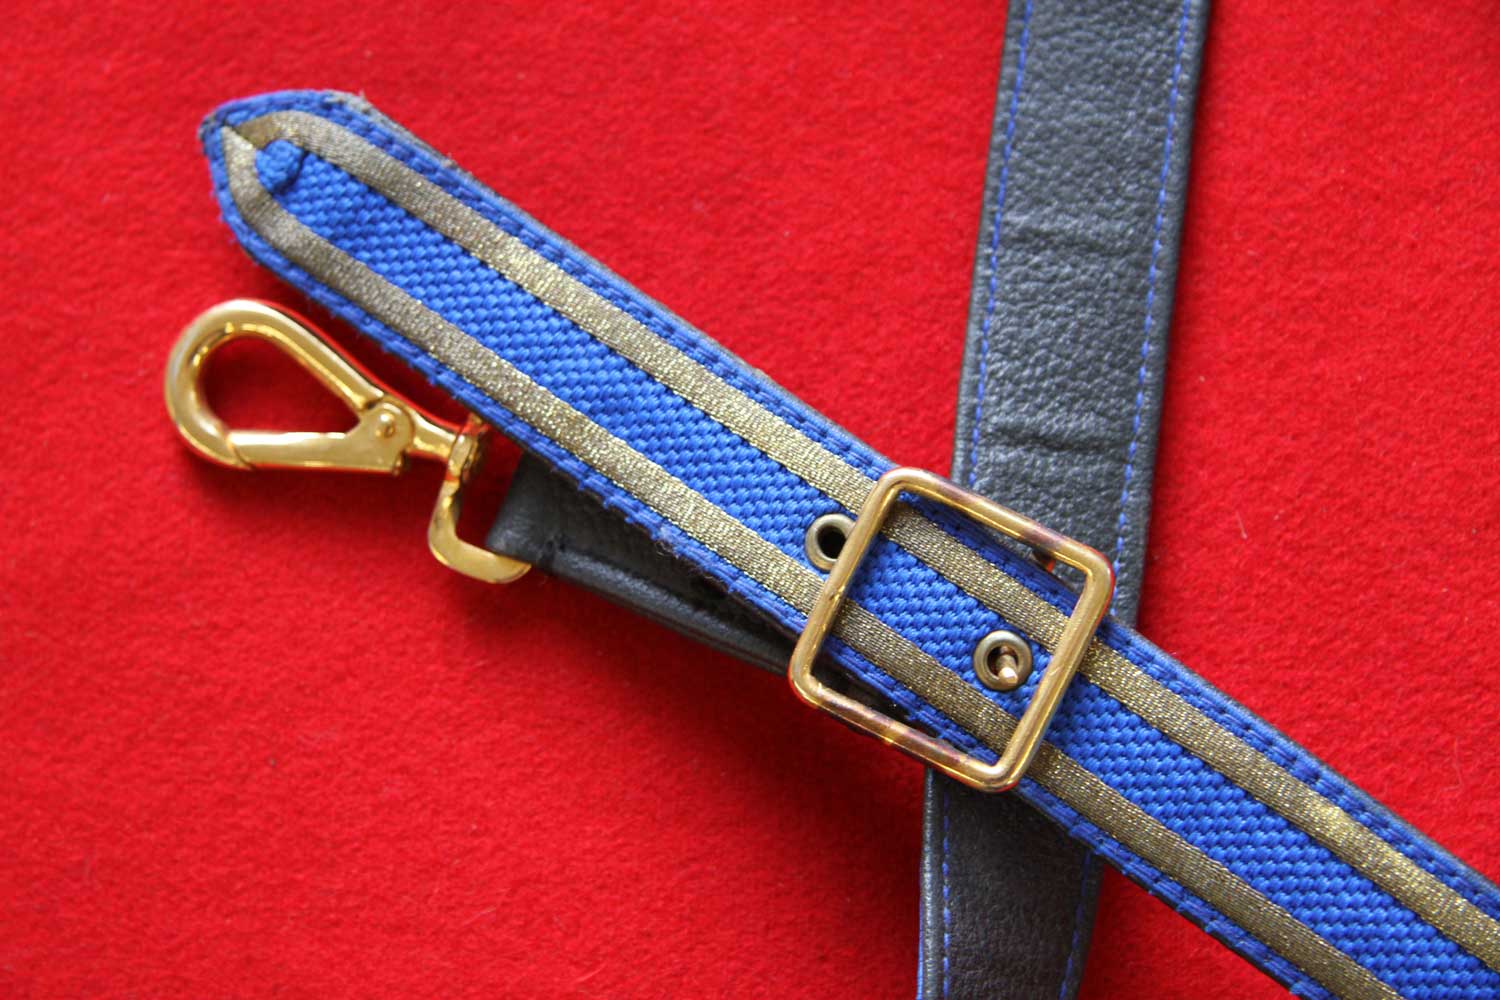 British, Royal Air Force Waist Belt and Slings - Click Image to Close